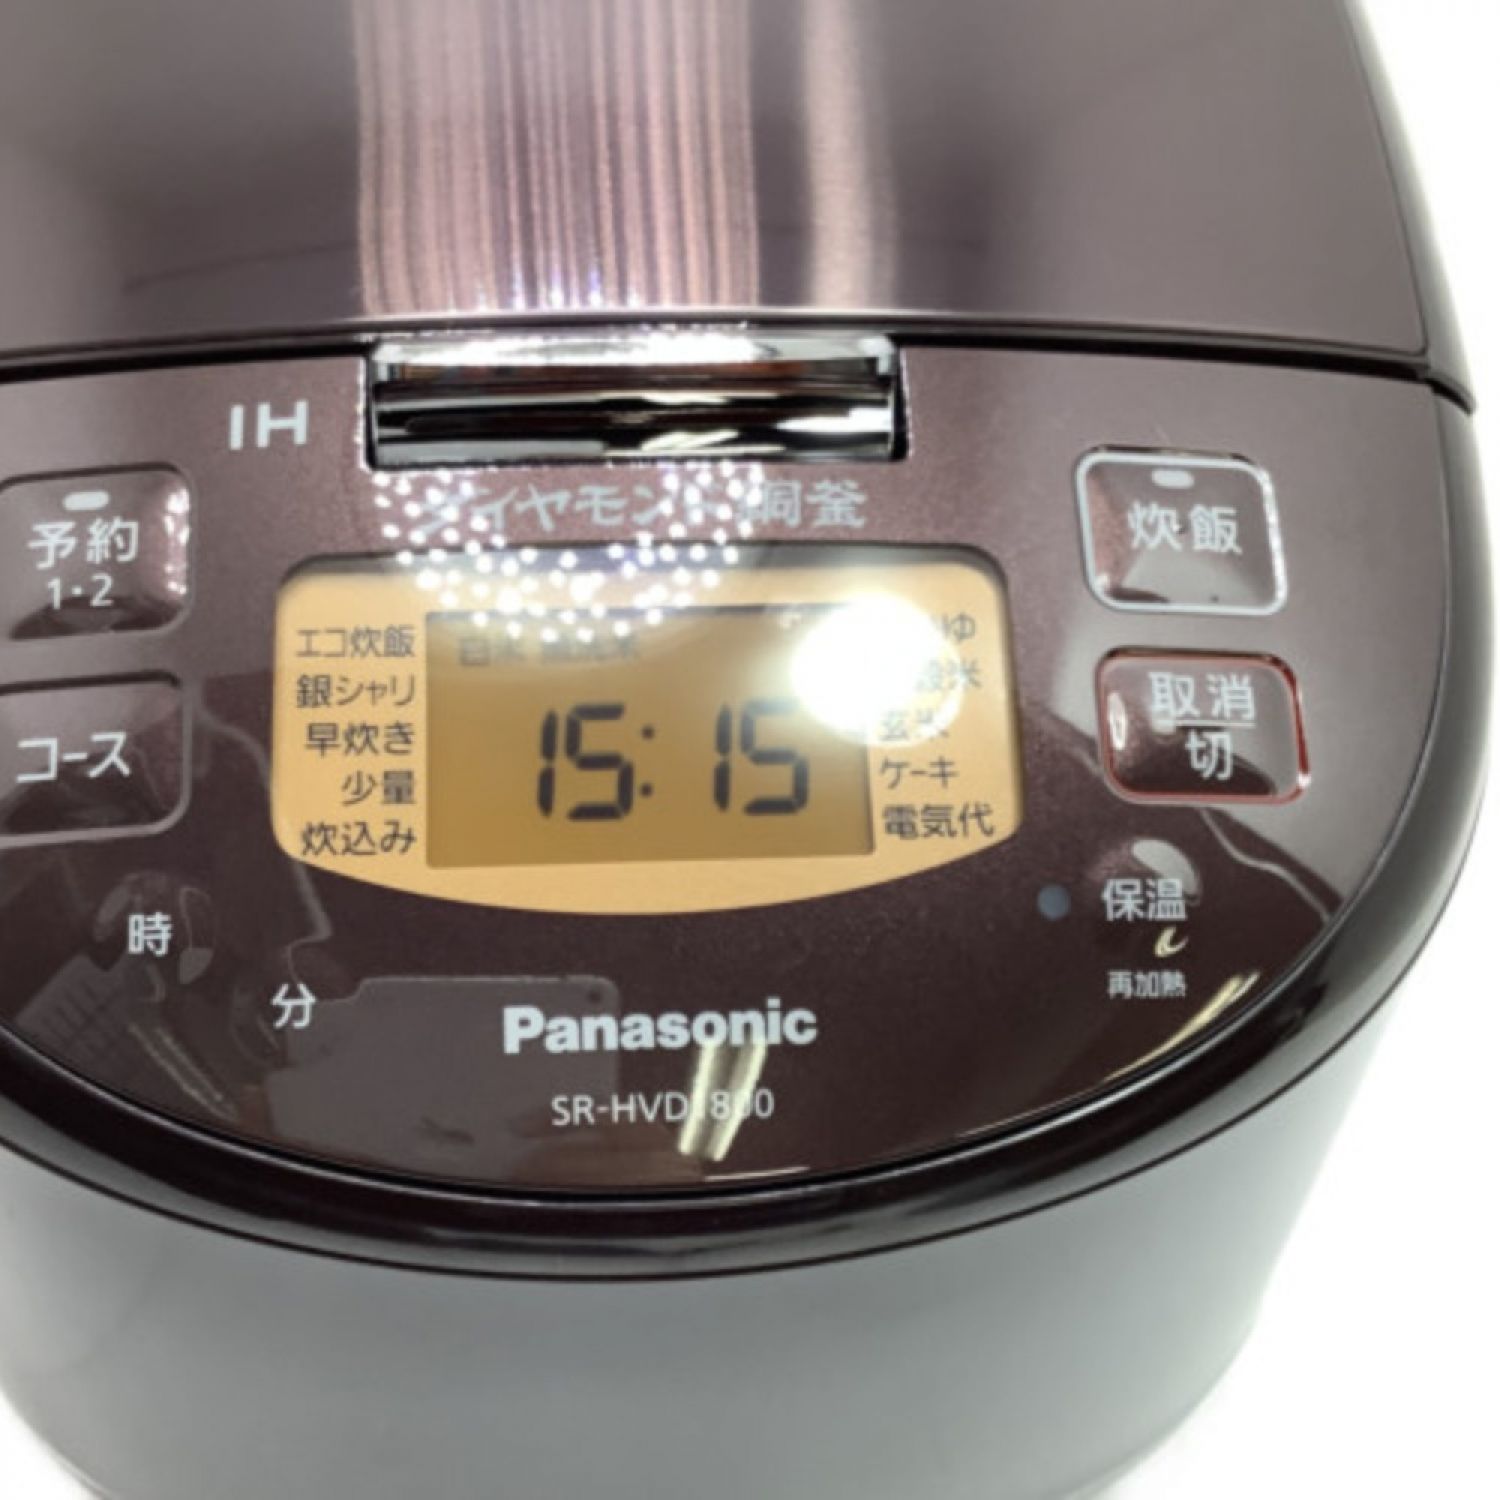 Panasonic 炊飯器 SR-HVD1800-T ブラウン 10合 1升炊き - 炊飯器